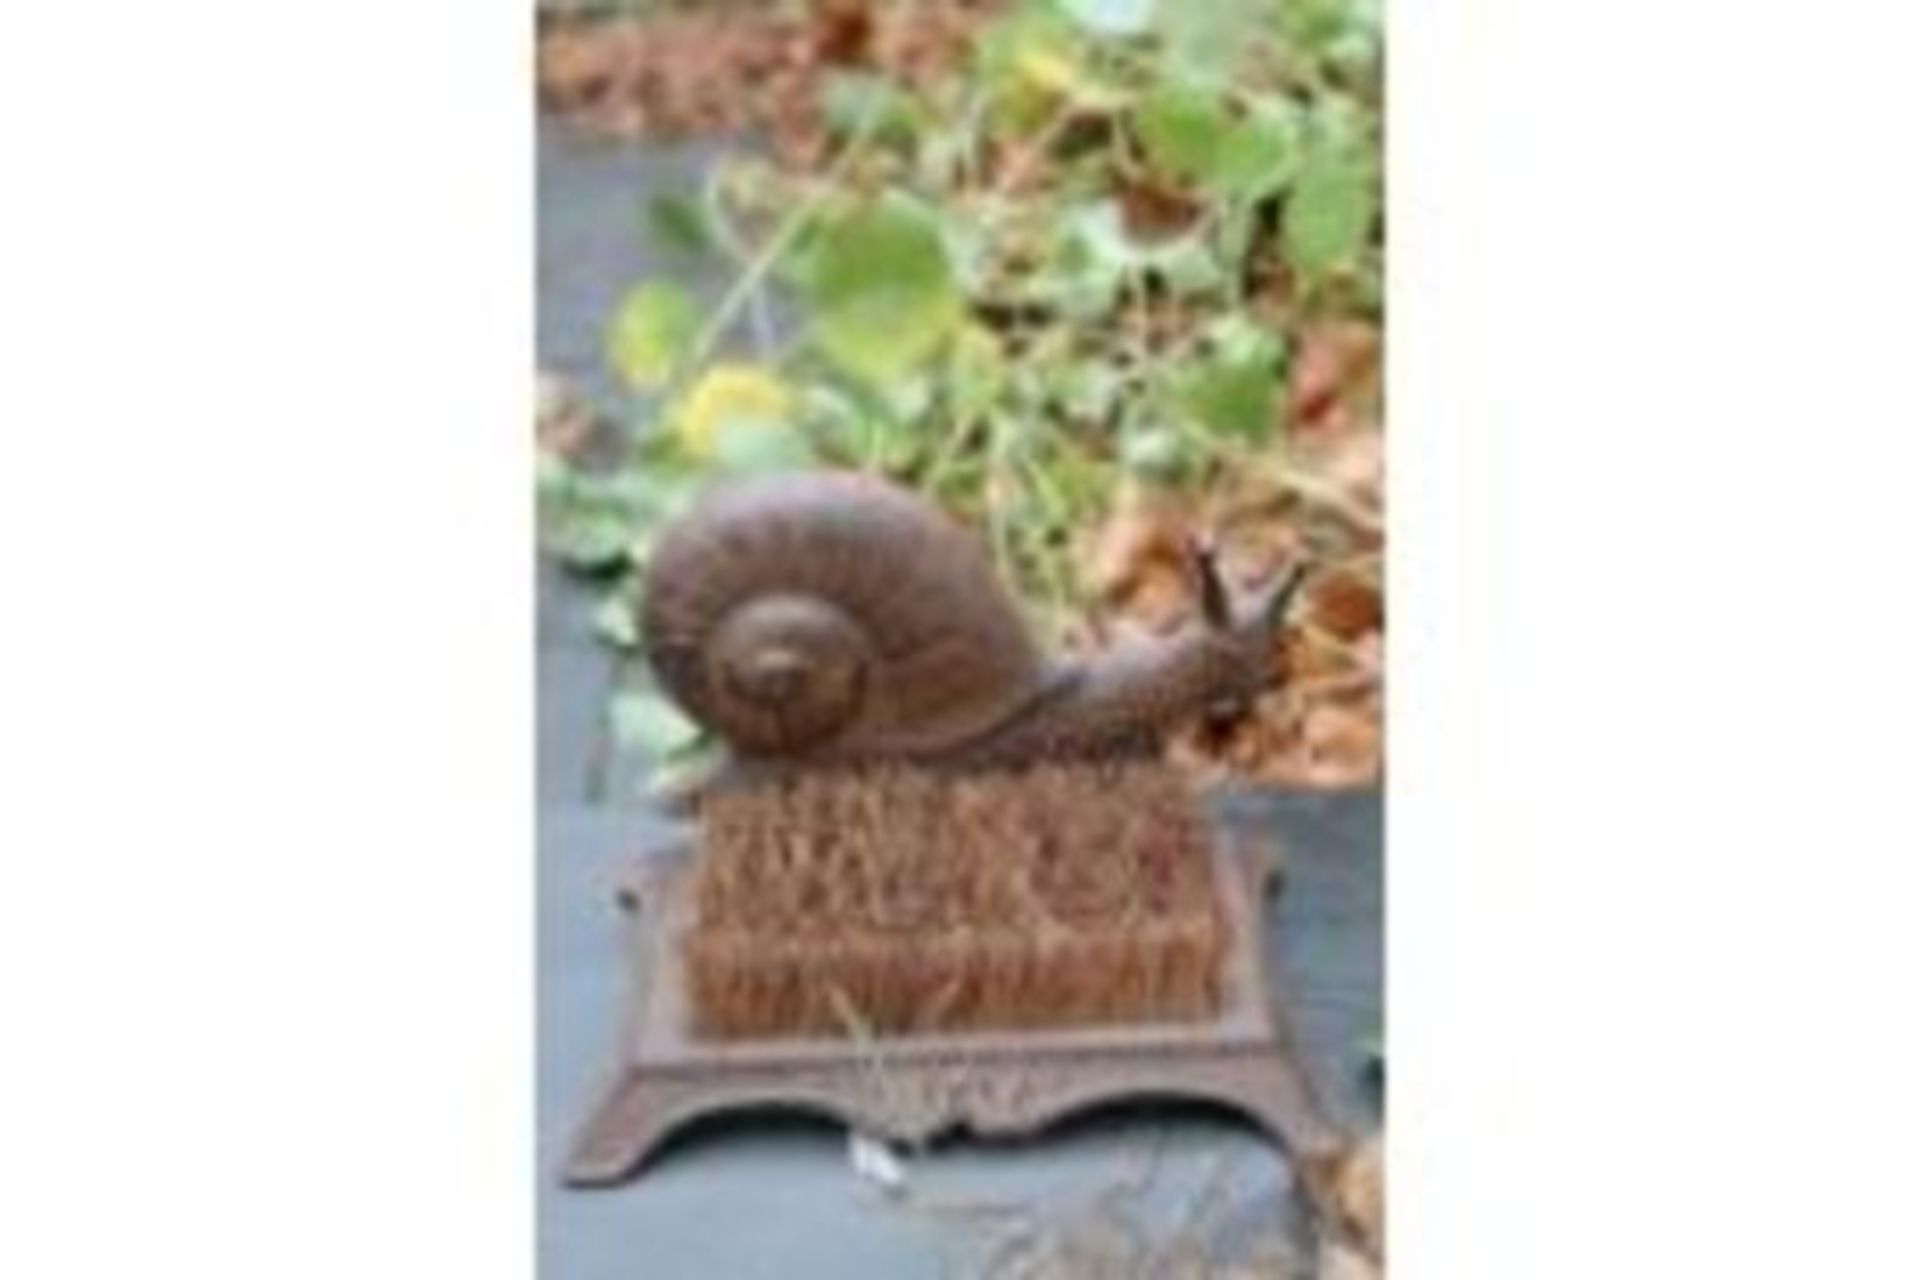 RRP £33 - New Fallen Fruits Metal Snail Boot Brush